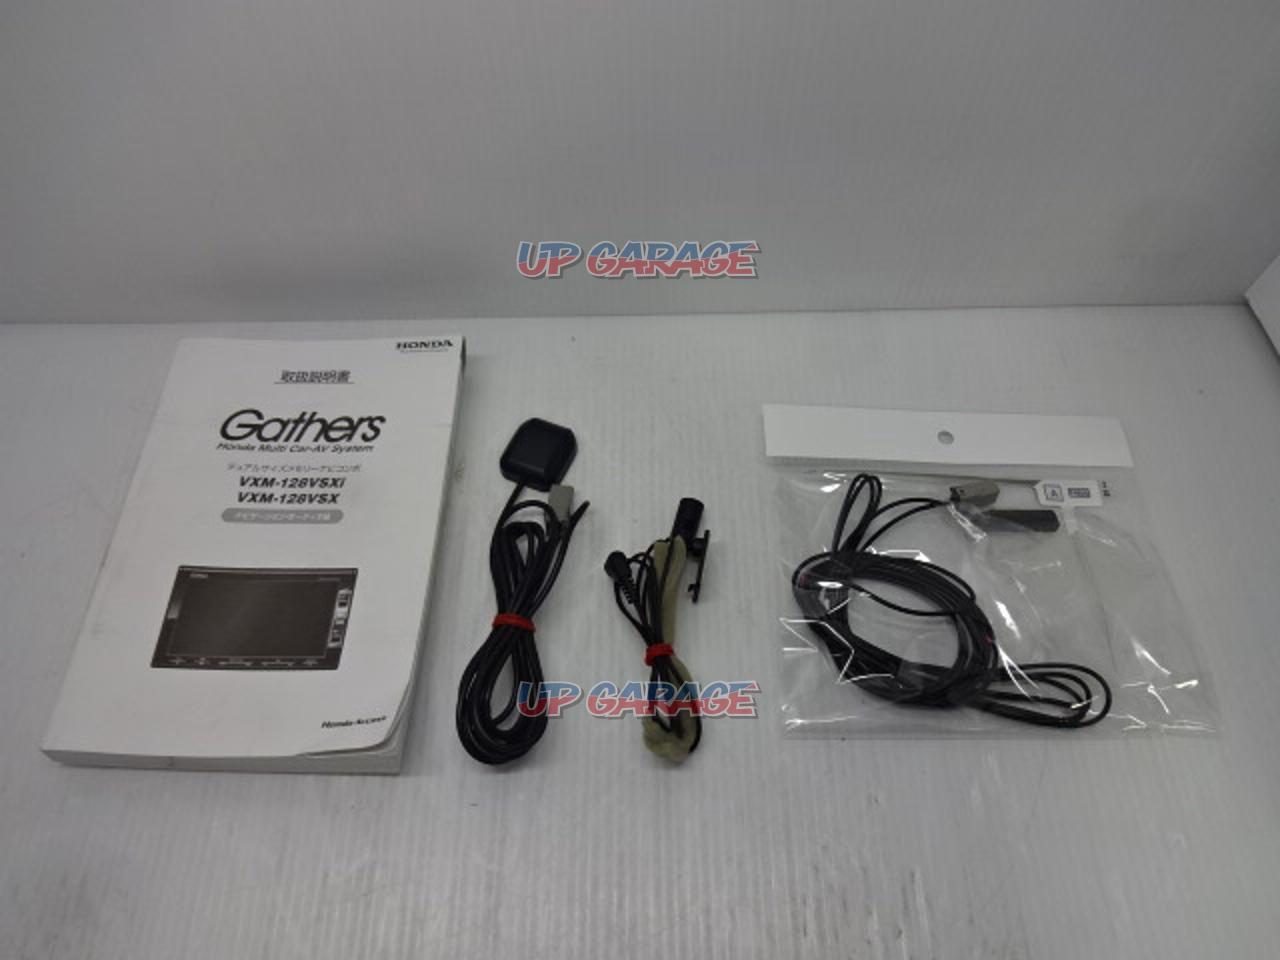 Genuine Gathers Vxm 128vsx Bluetooth Built In Honda User Like A Must See Memory Navigation Digital Croooober